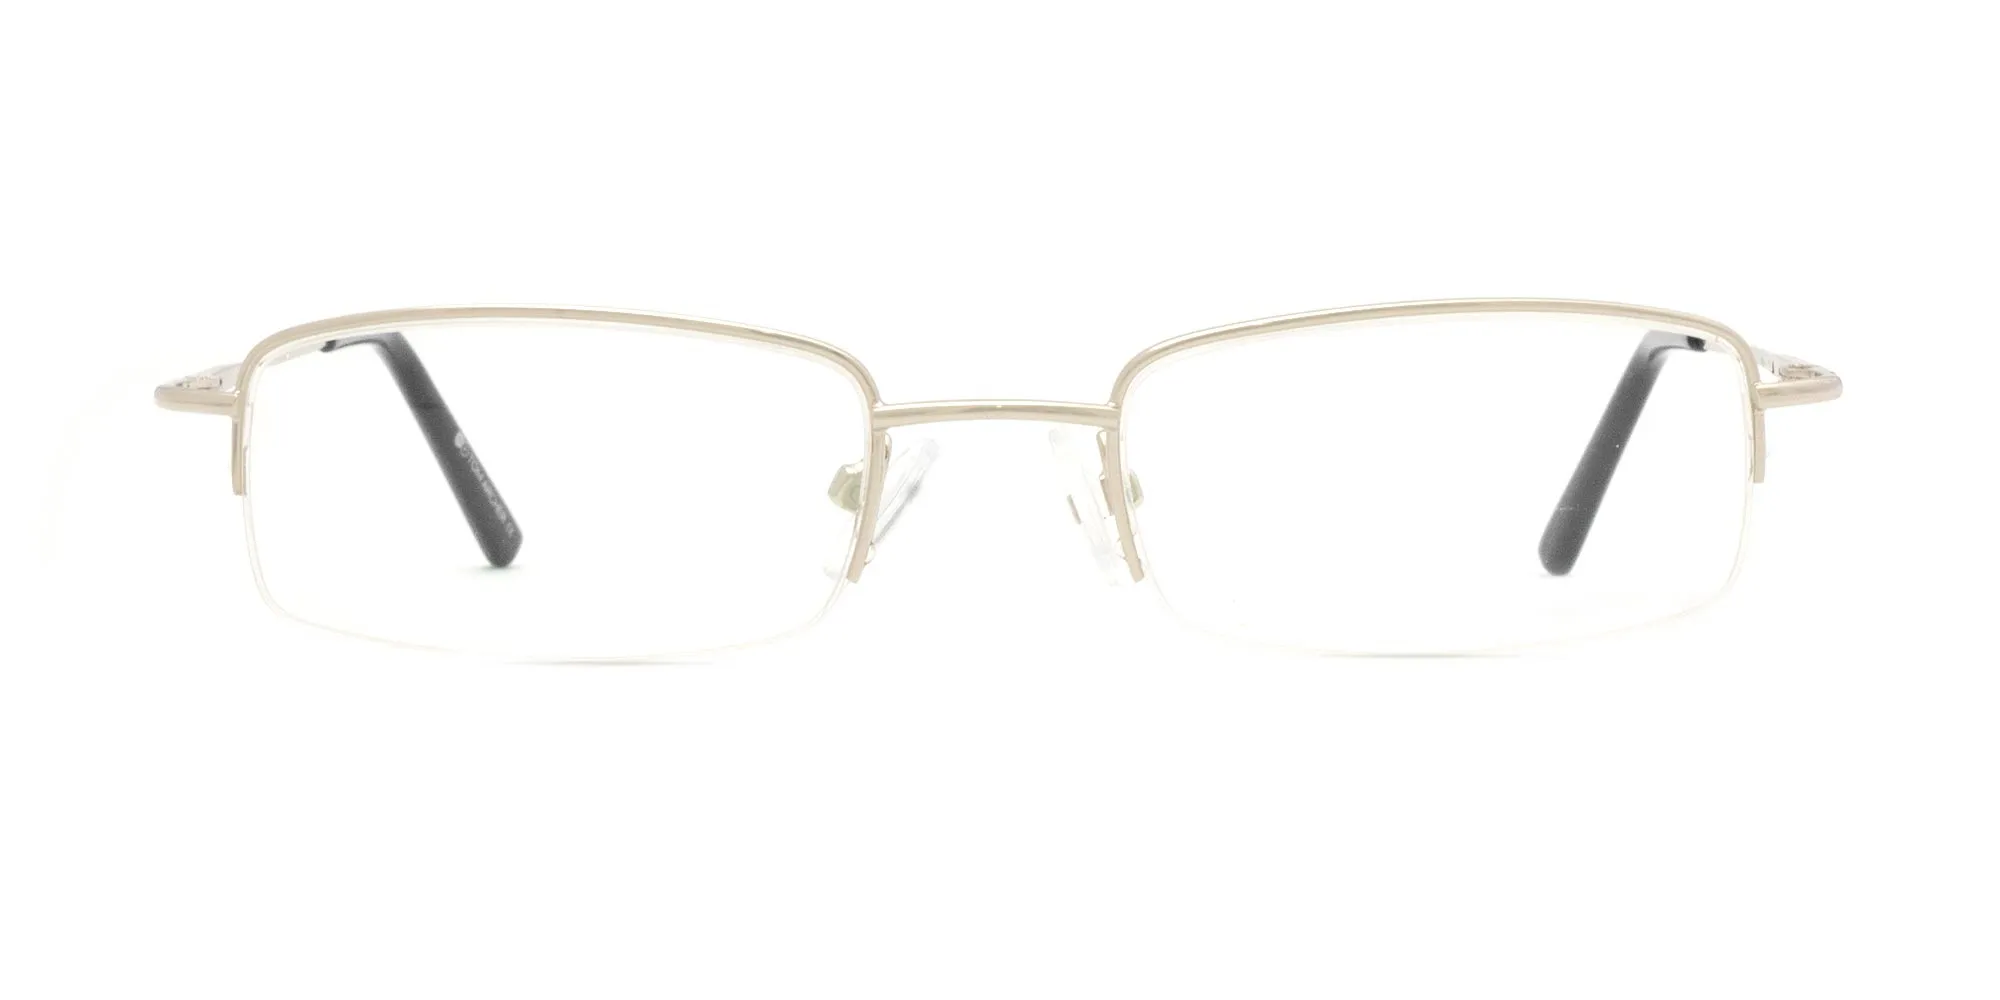 SALTLEY 3 - Gunmetal Half Rim Glasses | Specscart.®